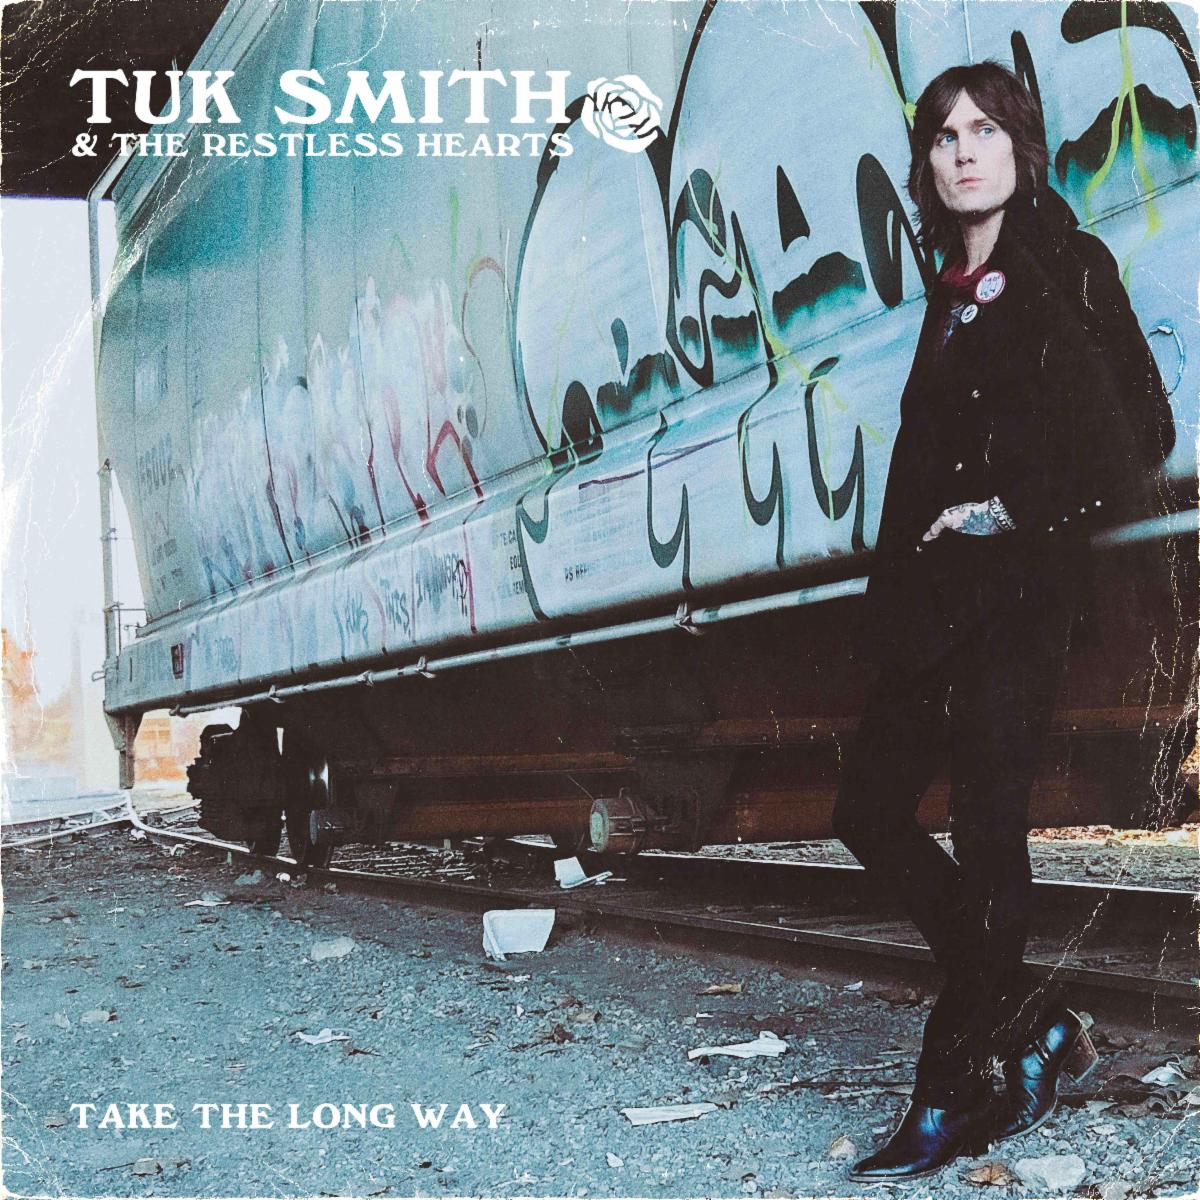 Tuk Smith & The Restless Hearts “Take The Long Way” single artwork